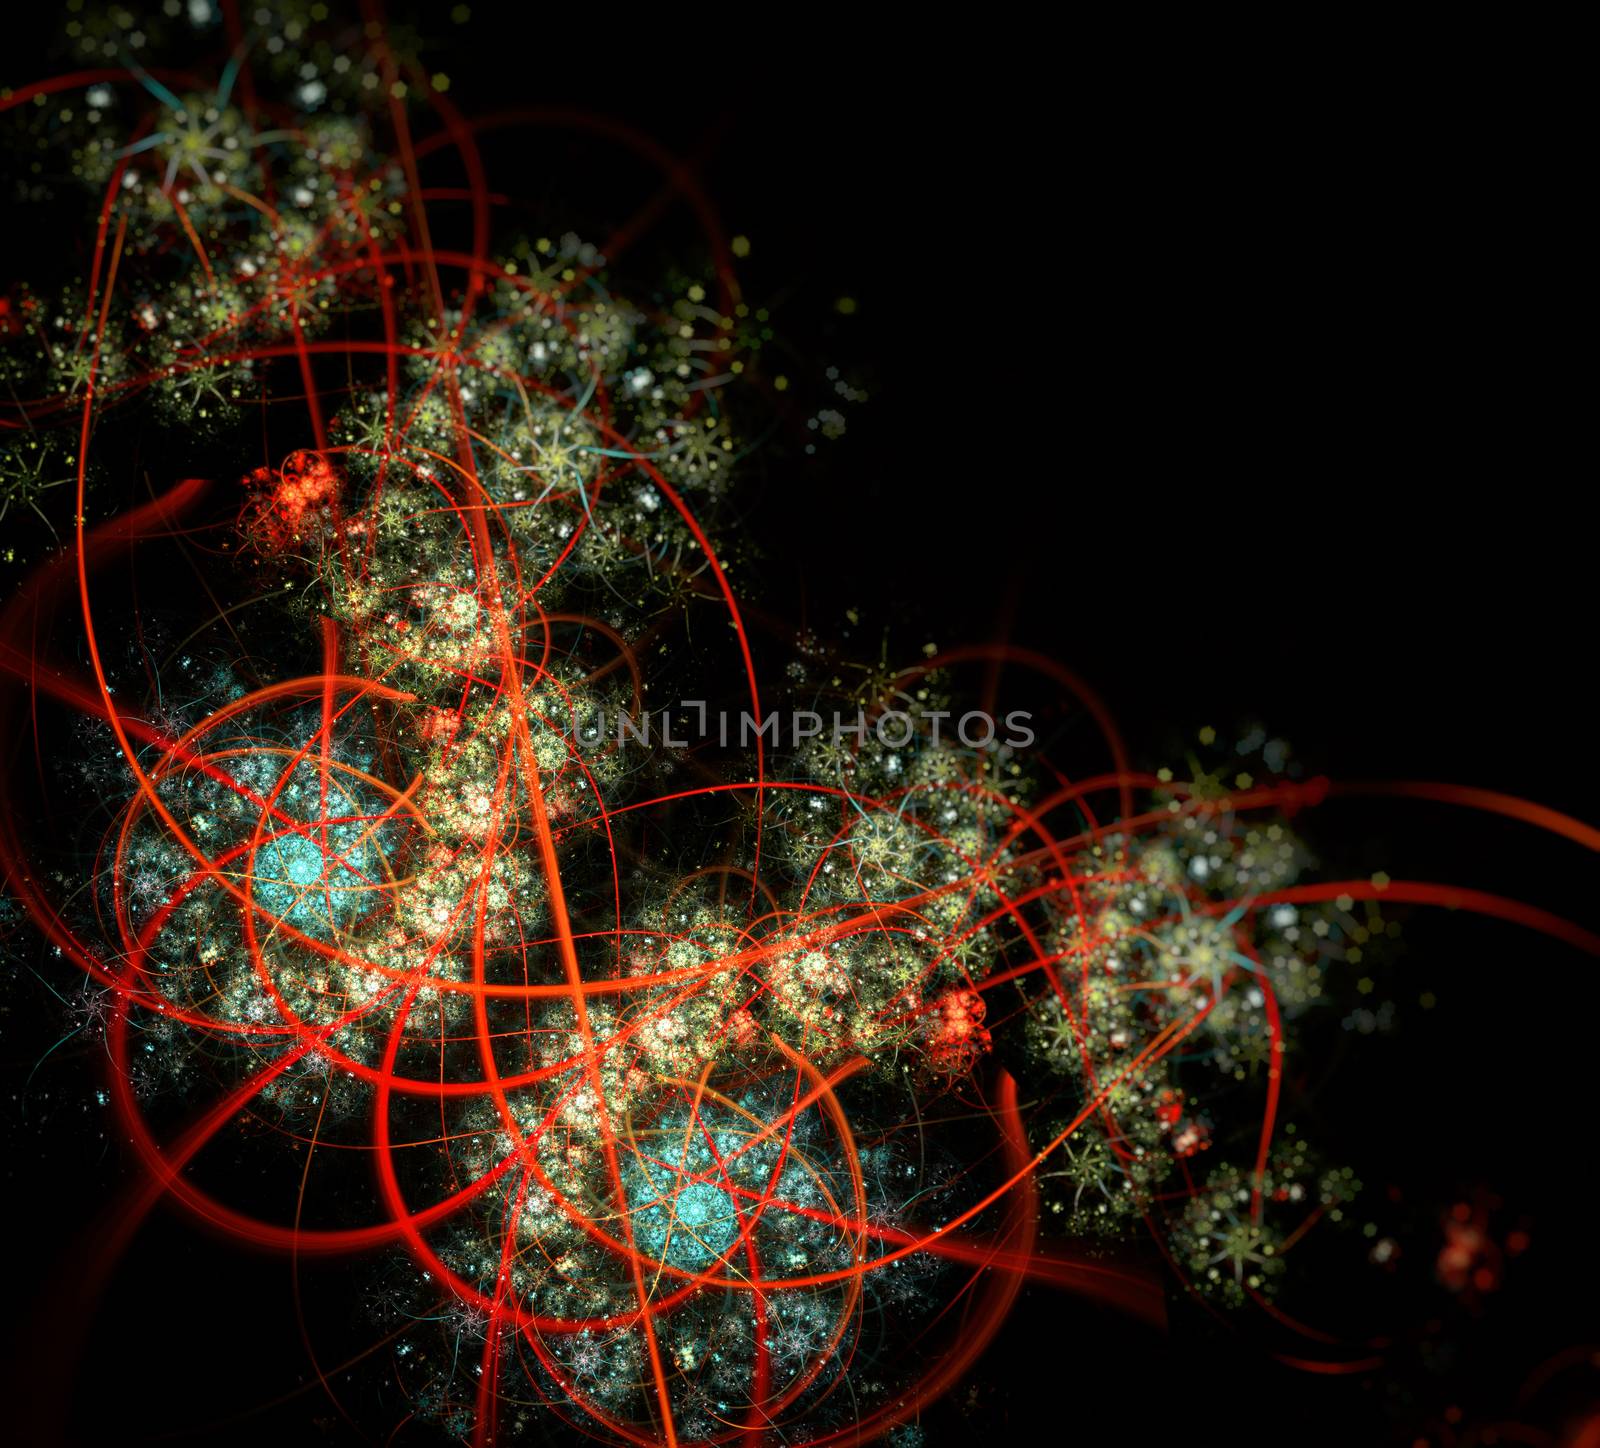 Galaxy fantasy. Fractal. Computer generated fractal artwork for design